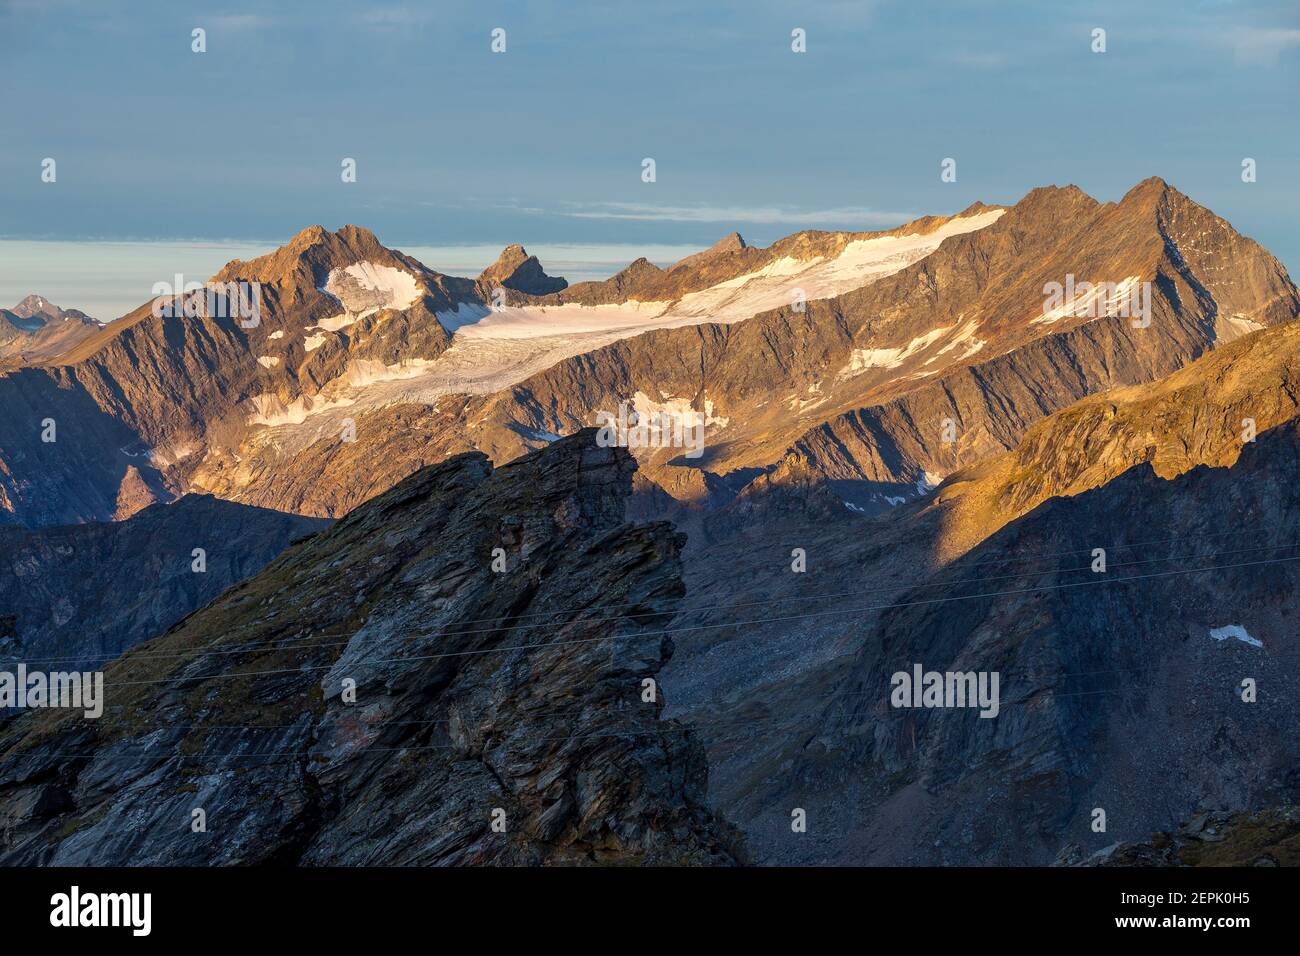 Sunlight at sunrise on Quirl and Malhamspitzen (Malham Spitzen) muntain peaks. Austrian Alps. Europe. Stock Photo